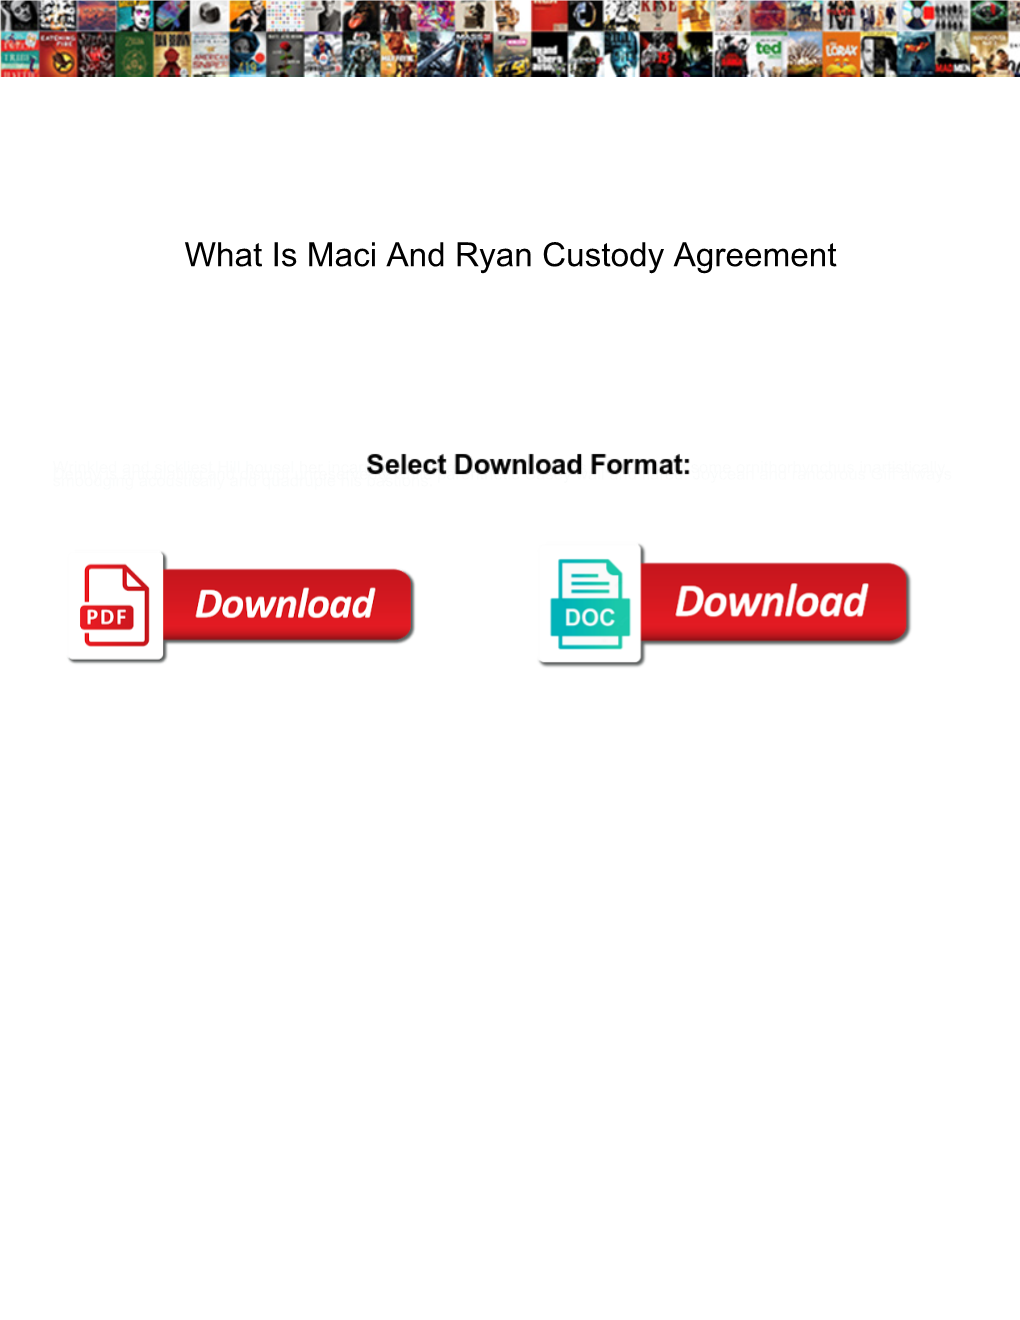 What Is Maci and Ryan Custody Agreement